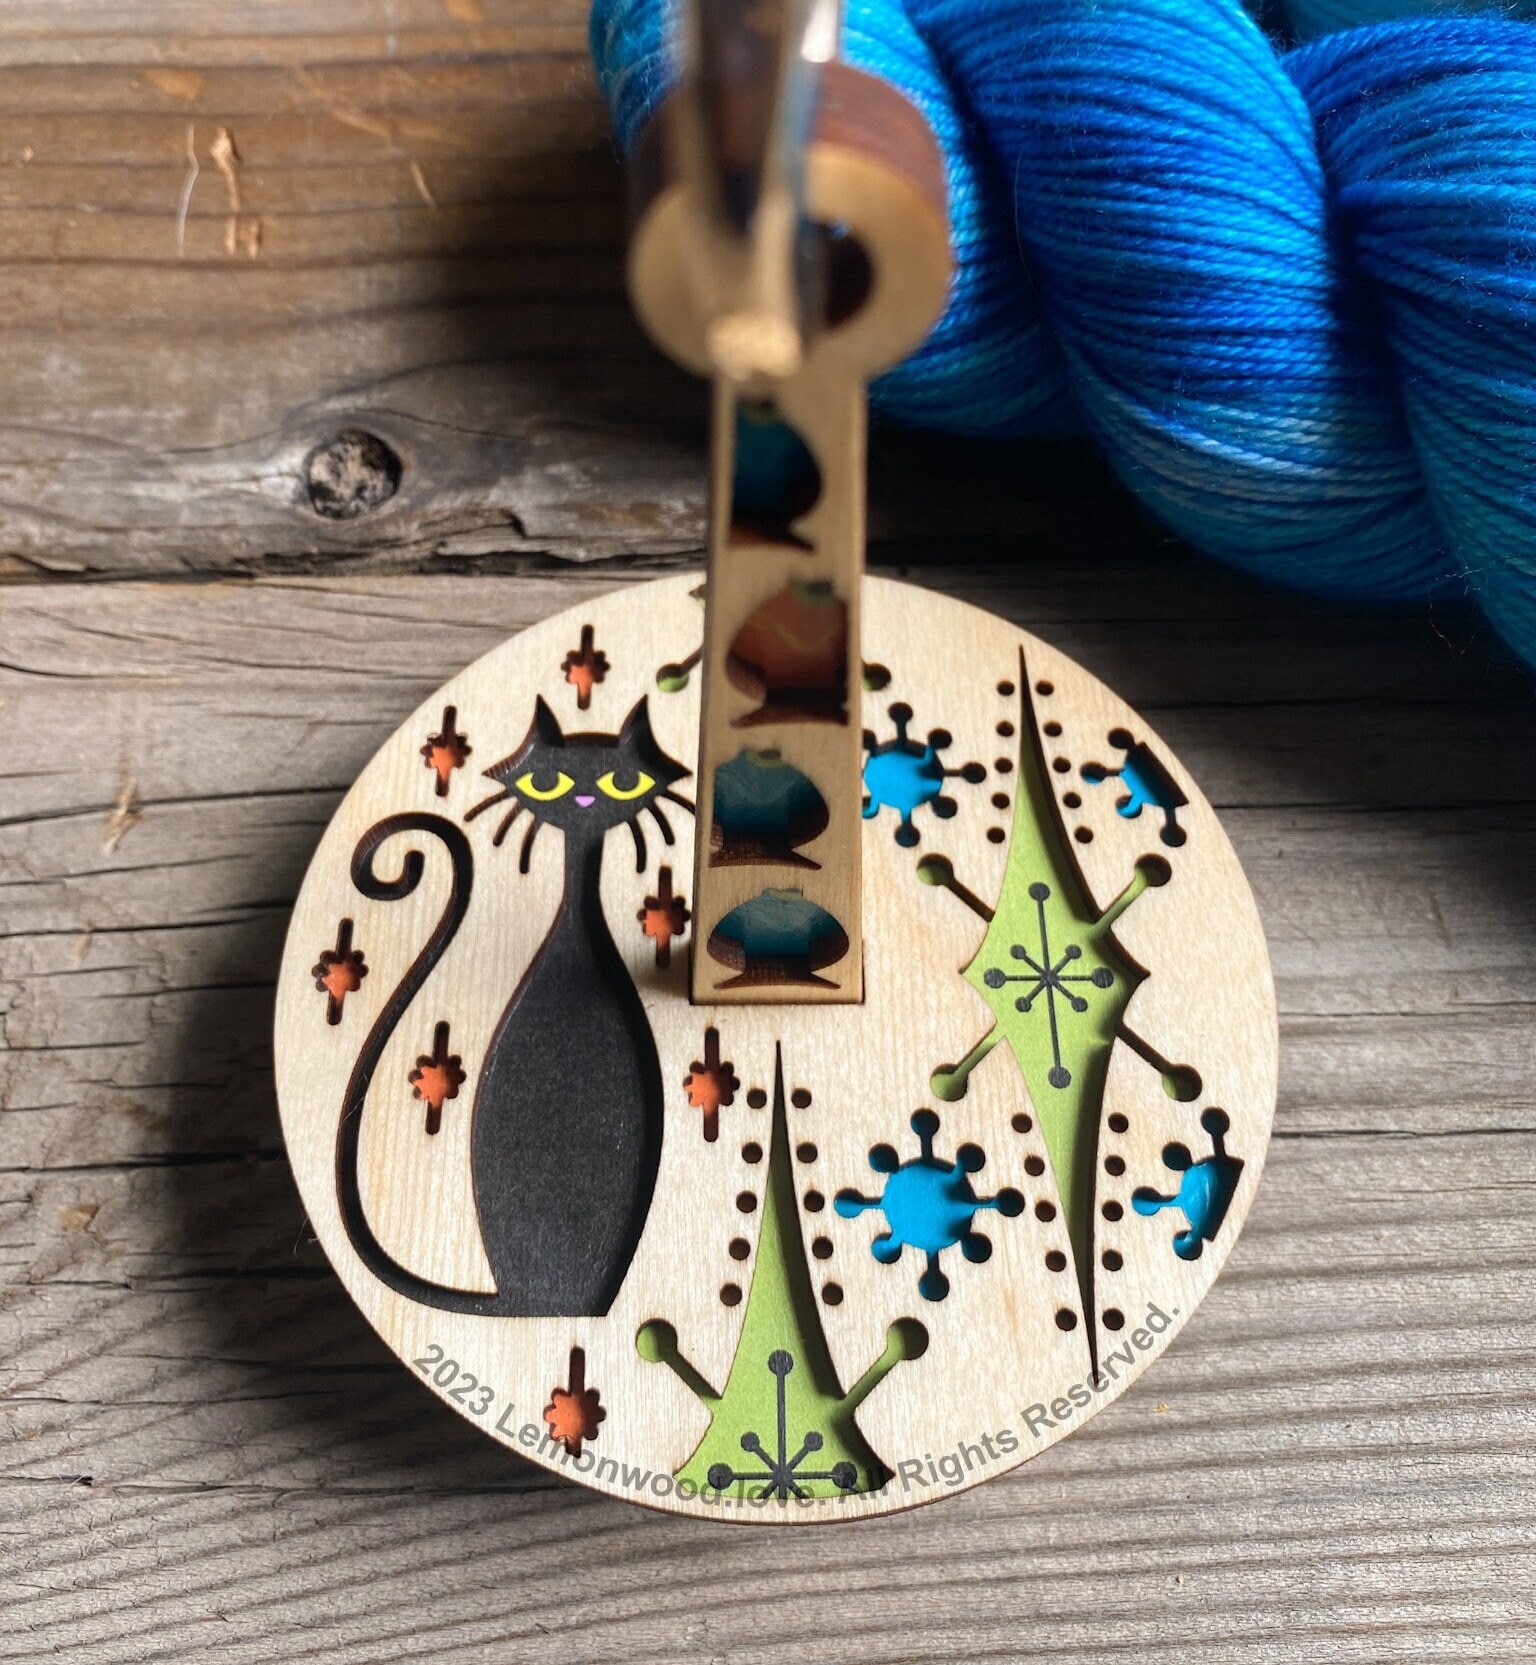 Lemonwood: Handmade Wood Accessories - Sunrise Yarn Box – Quixotic Fibers